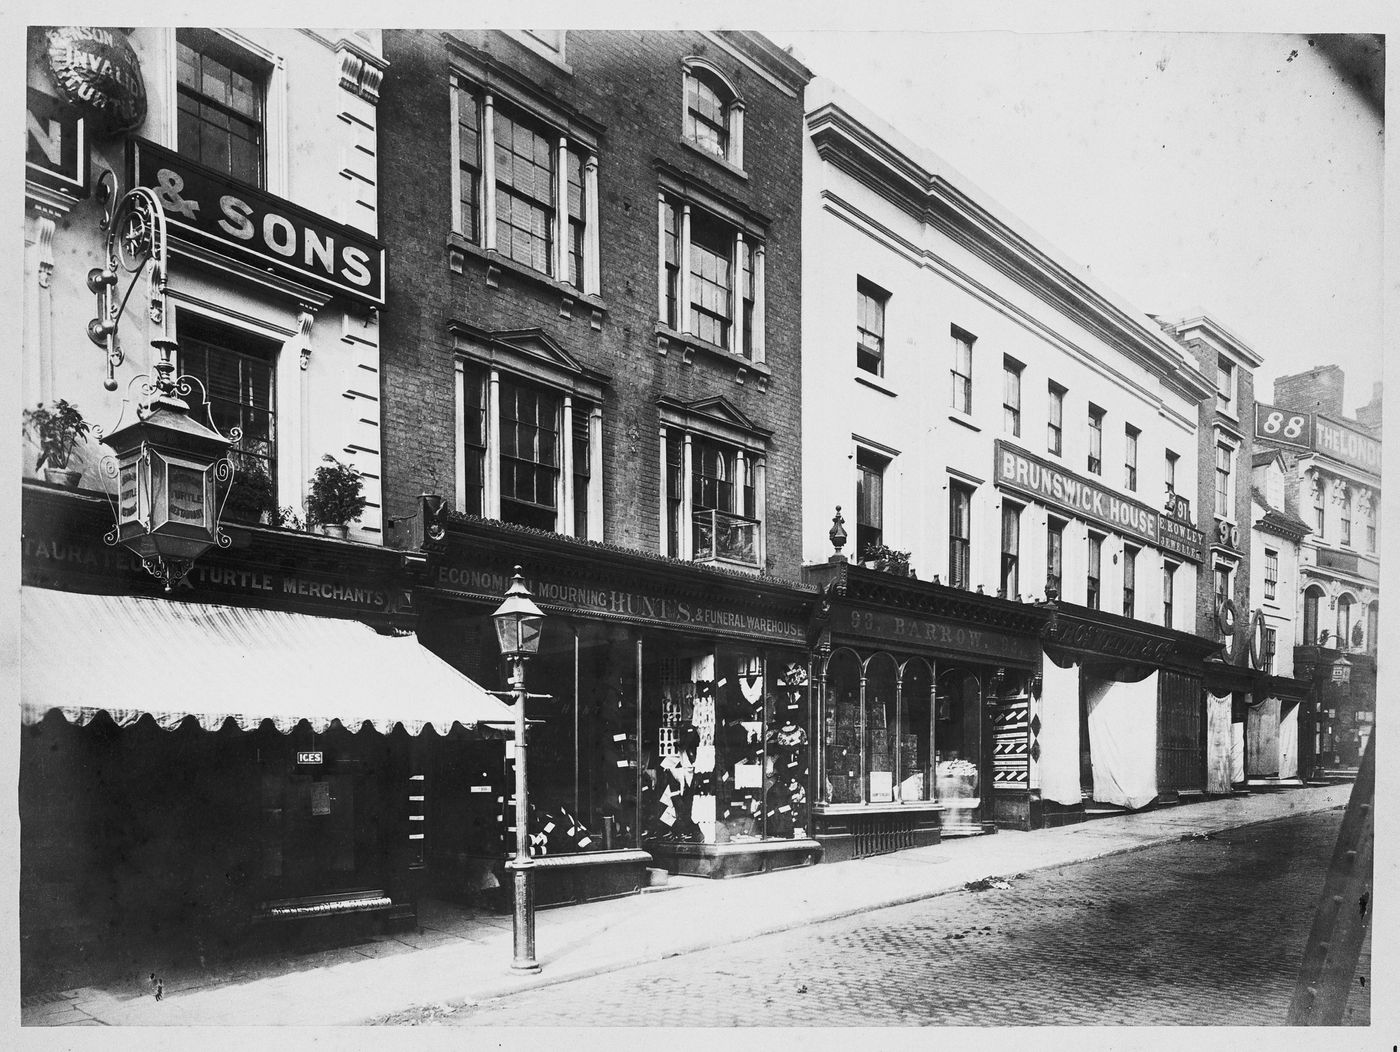 View of shops in Bull Street, Birmingham, England